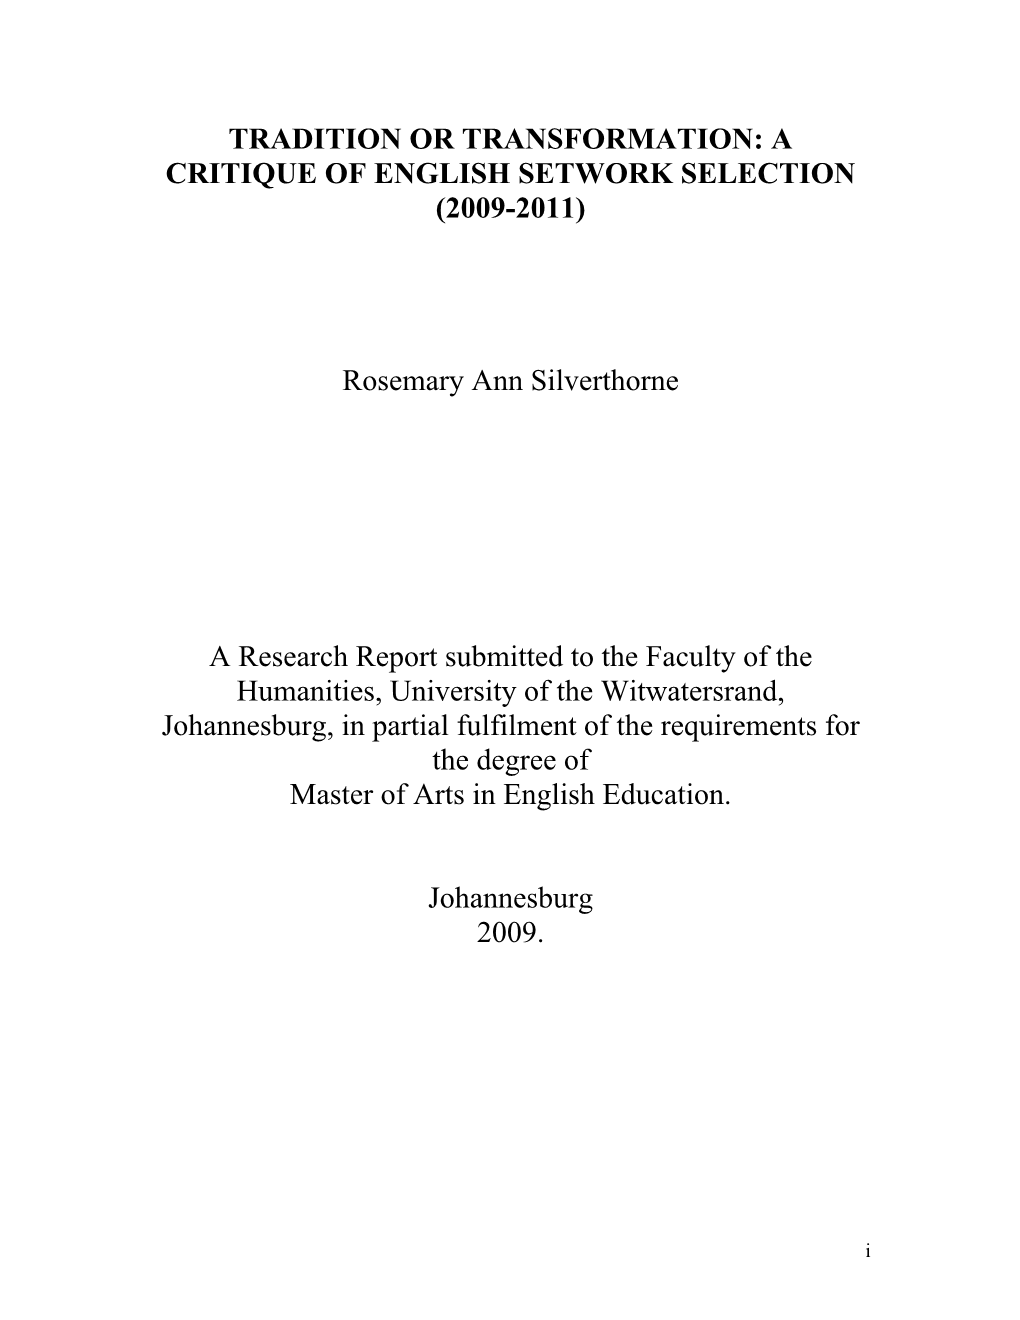 A Critique of English Setwork Selection (2009-2011)